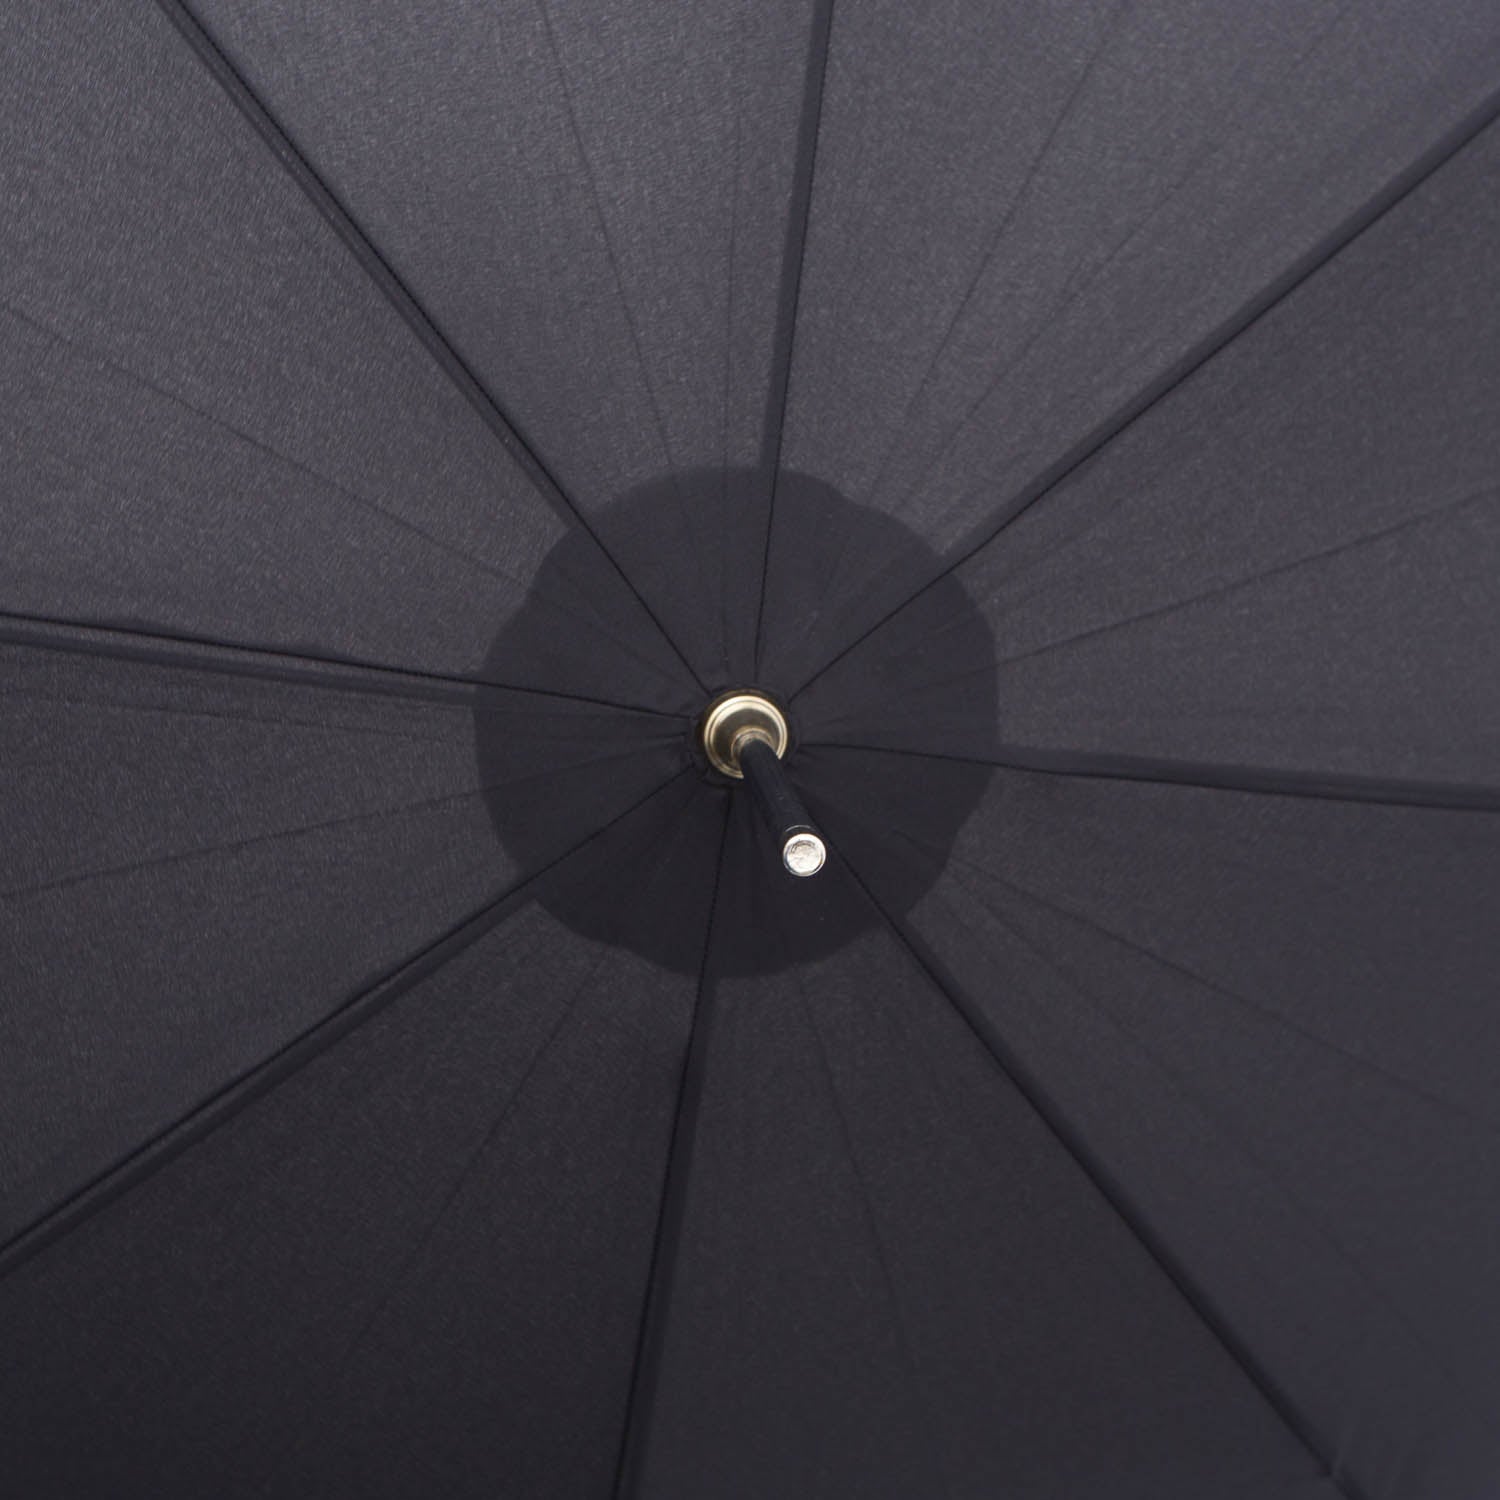 Mario Talarico Black Canopy Umbrella with Dog Horn Handle